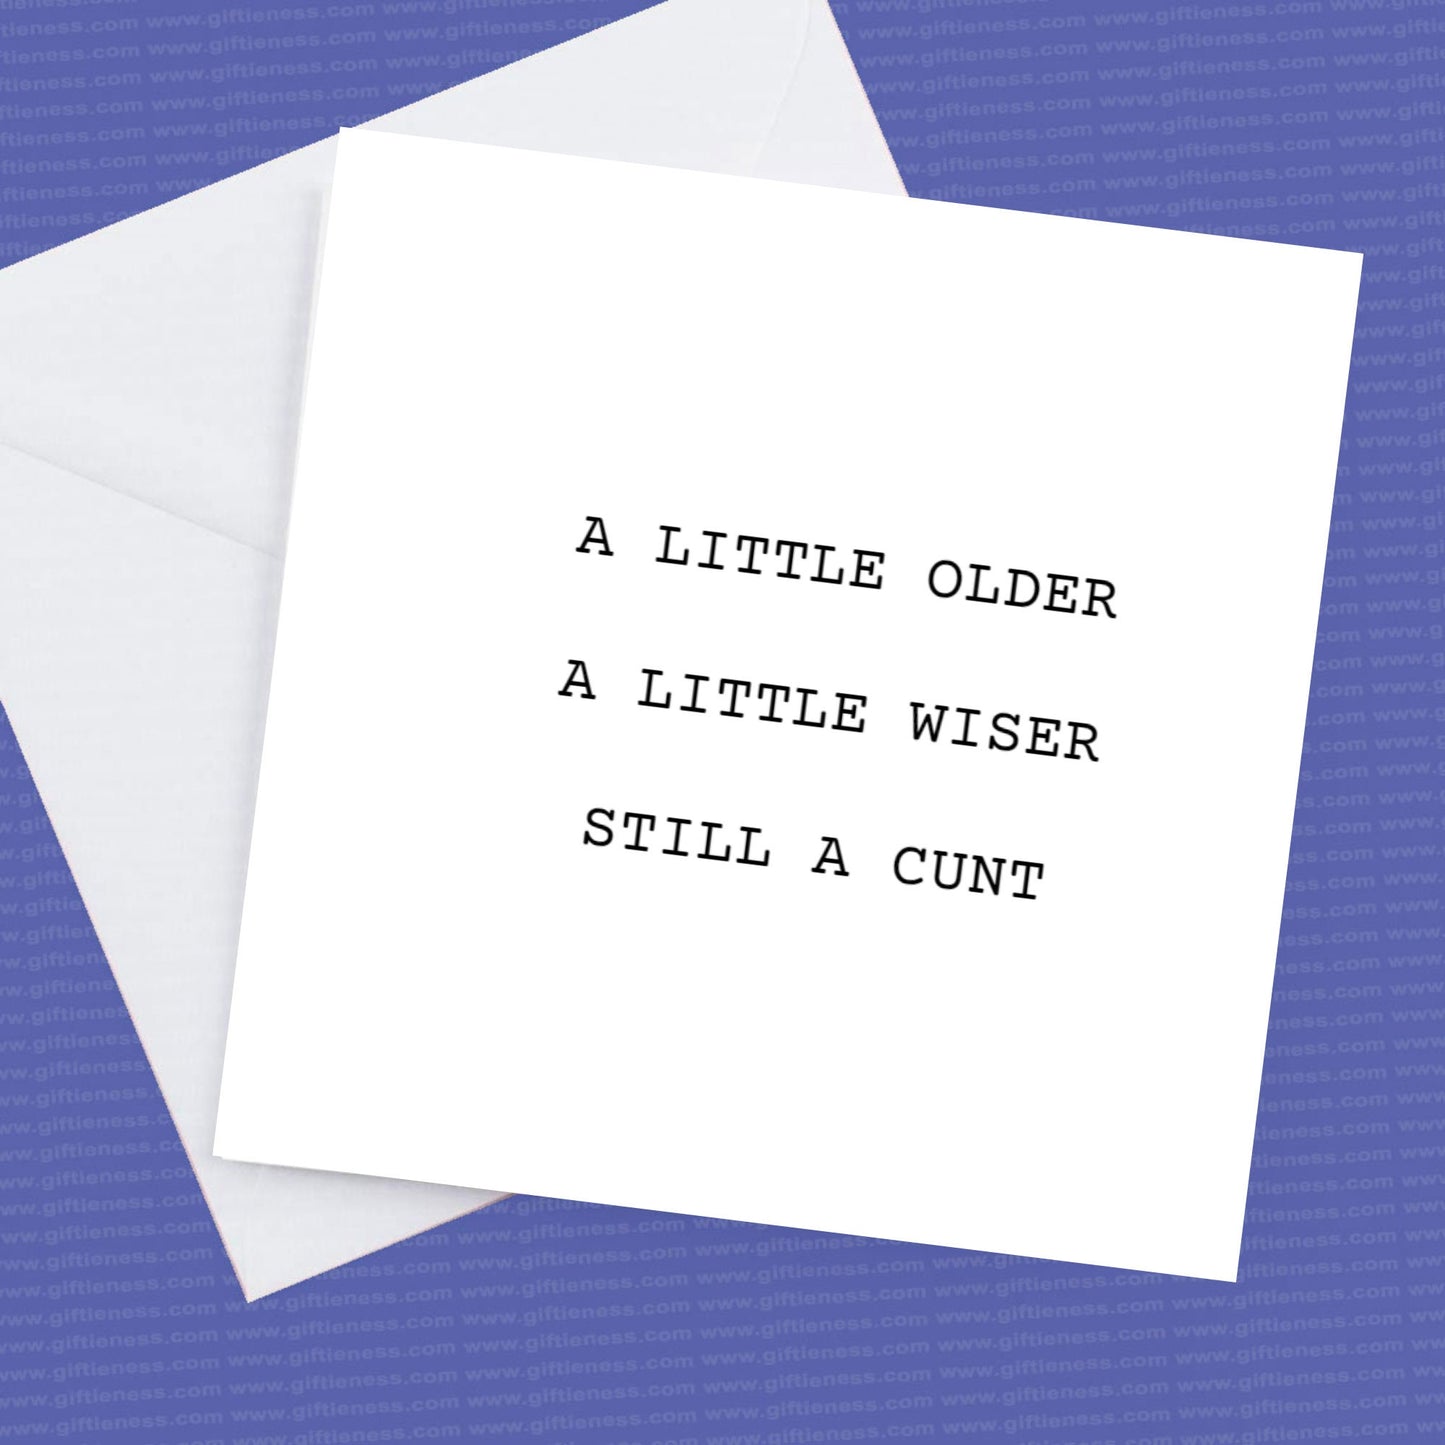 A Little older, A Little Wiser, Still a Cunt card and envelope